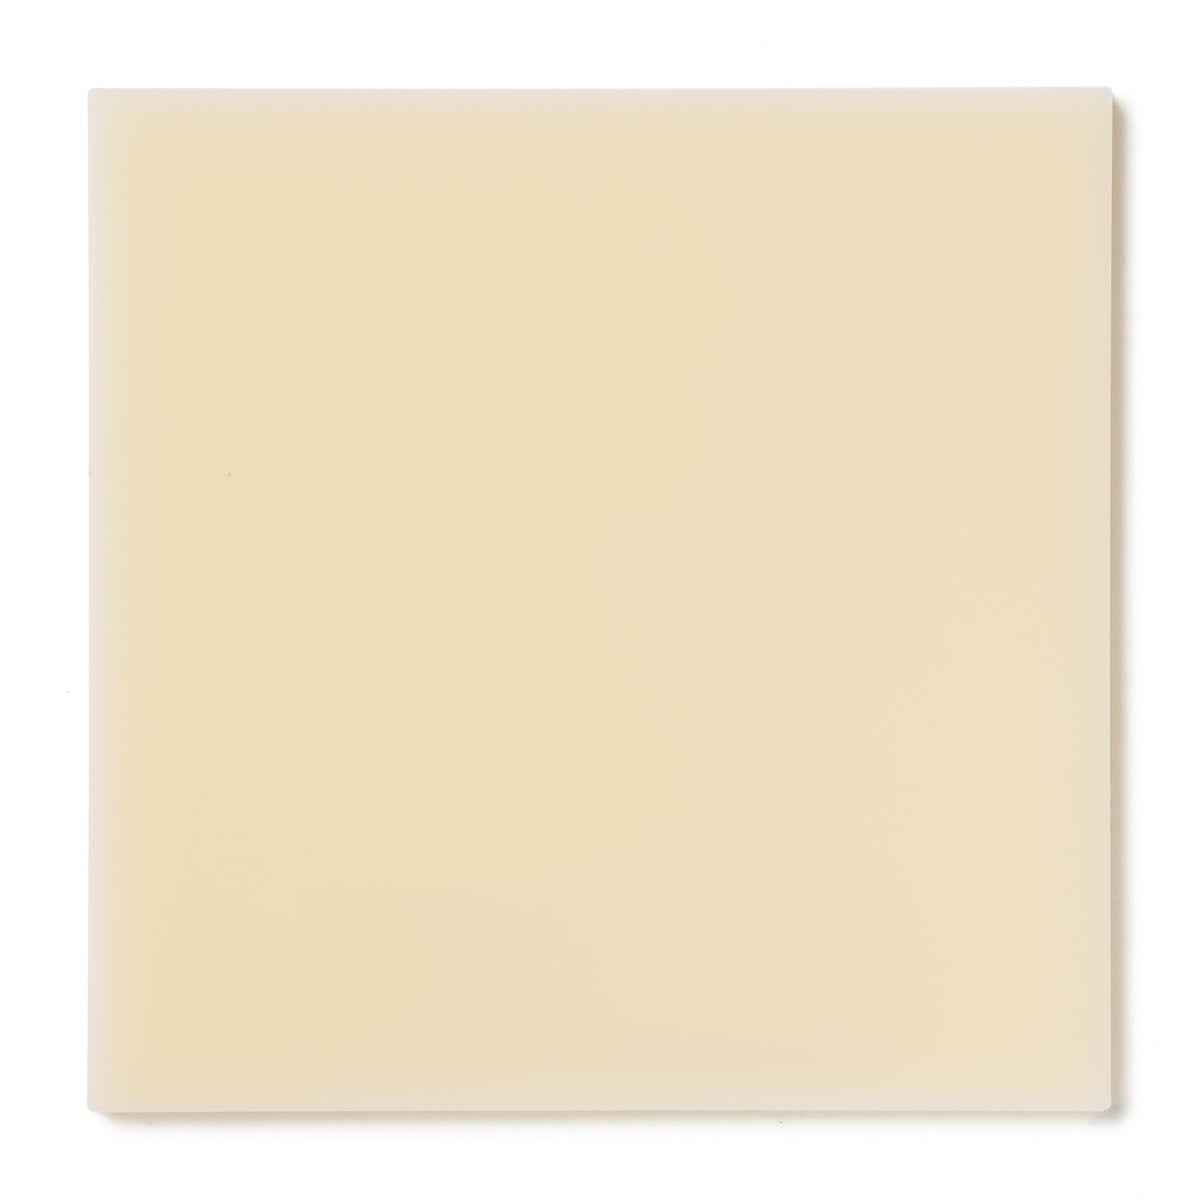 Ivory Opaque Acrylic Plexiglass Sheet, color 2146